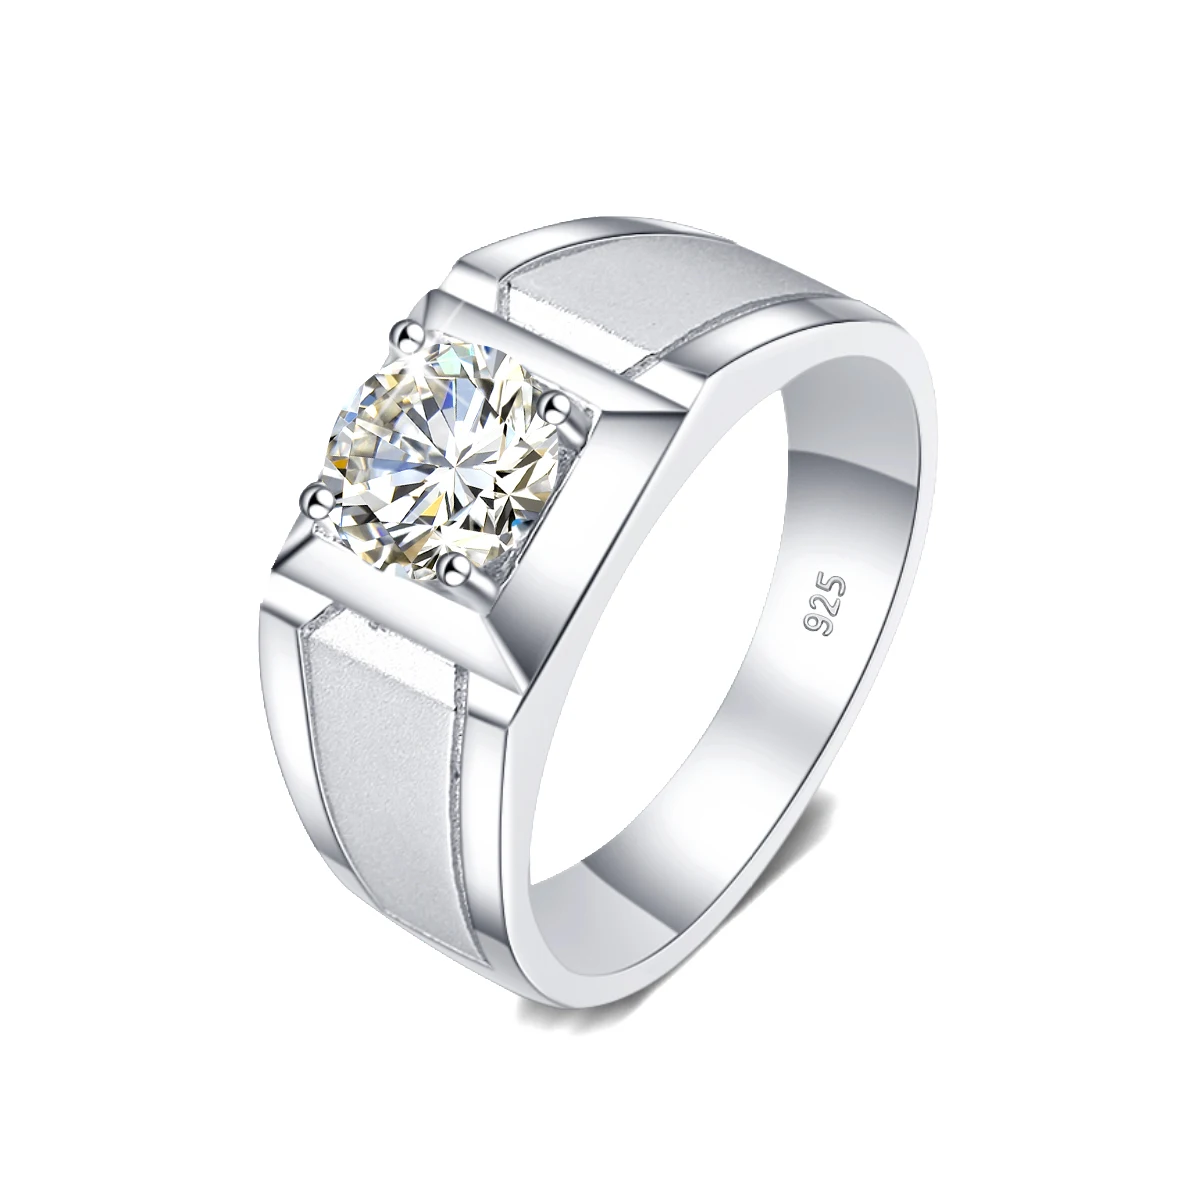 2 Carat Moissanite Rings For Men 925 Sterling Silver White Gold plated Engagement Wedding Mens Jewellery 2023 Trend Gift Female